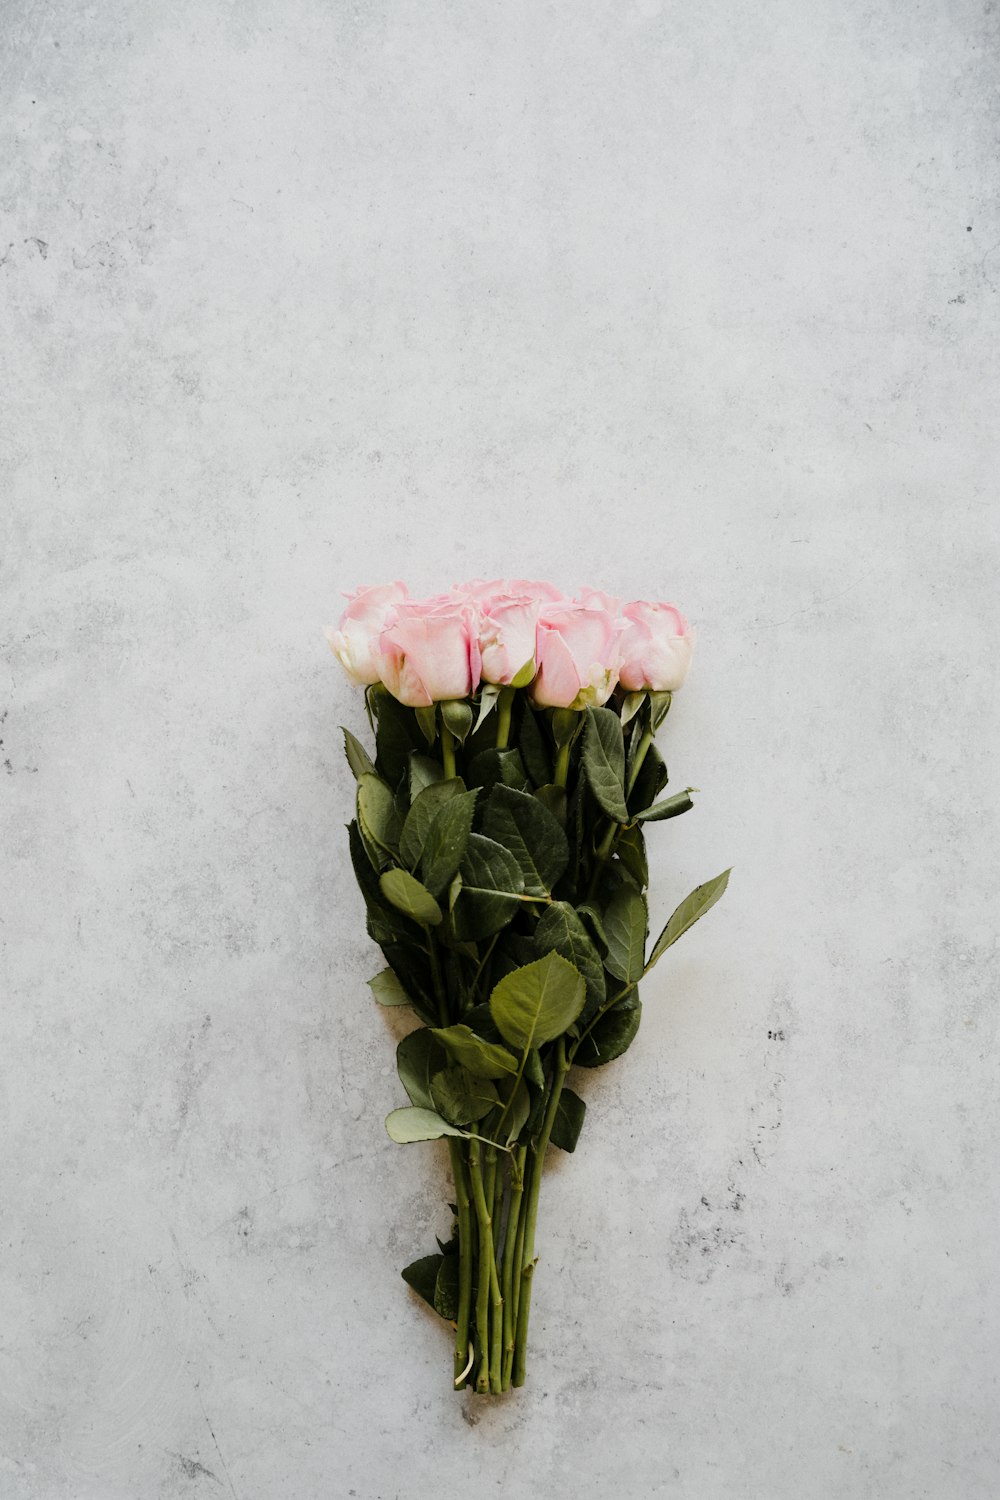 Un ramo de rosas rosas sobre un fondo blanco